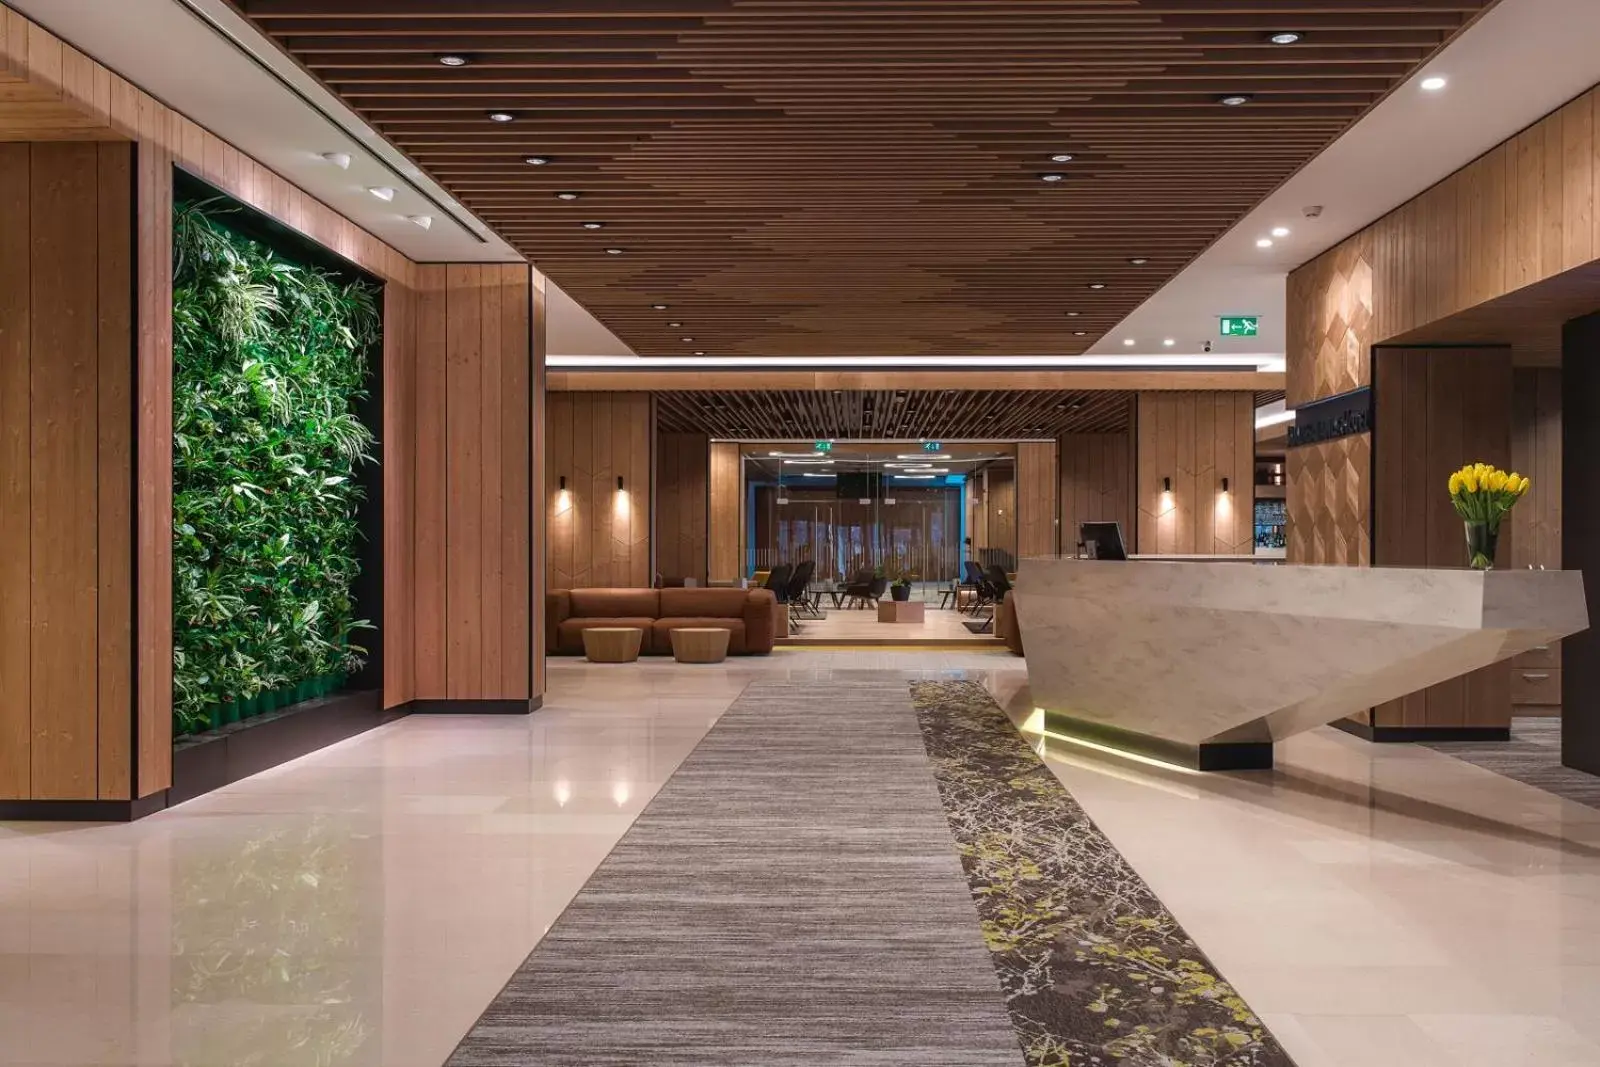 Lobby or reception in Rikli Balance Hotel – Sava Hotels & Resorts